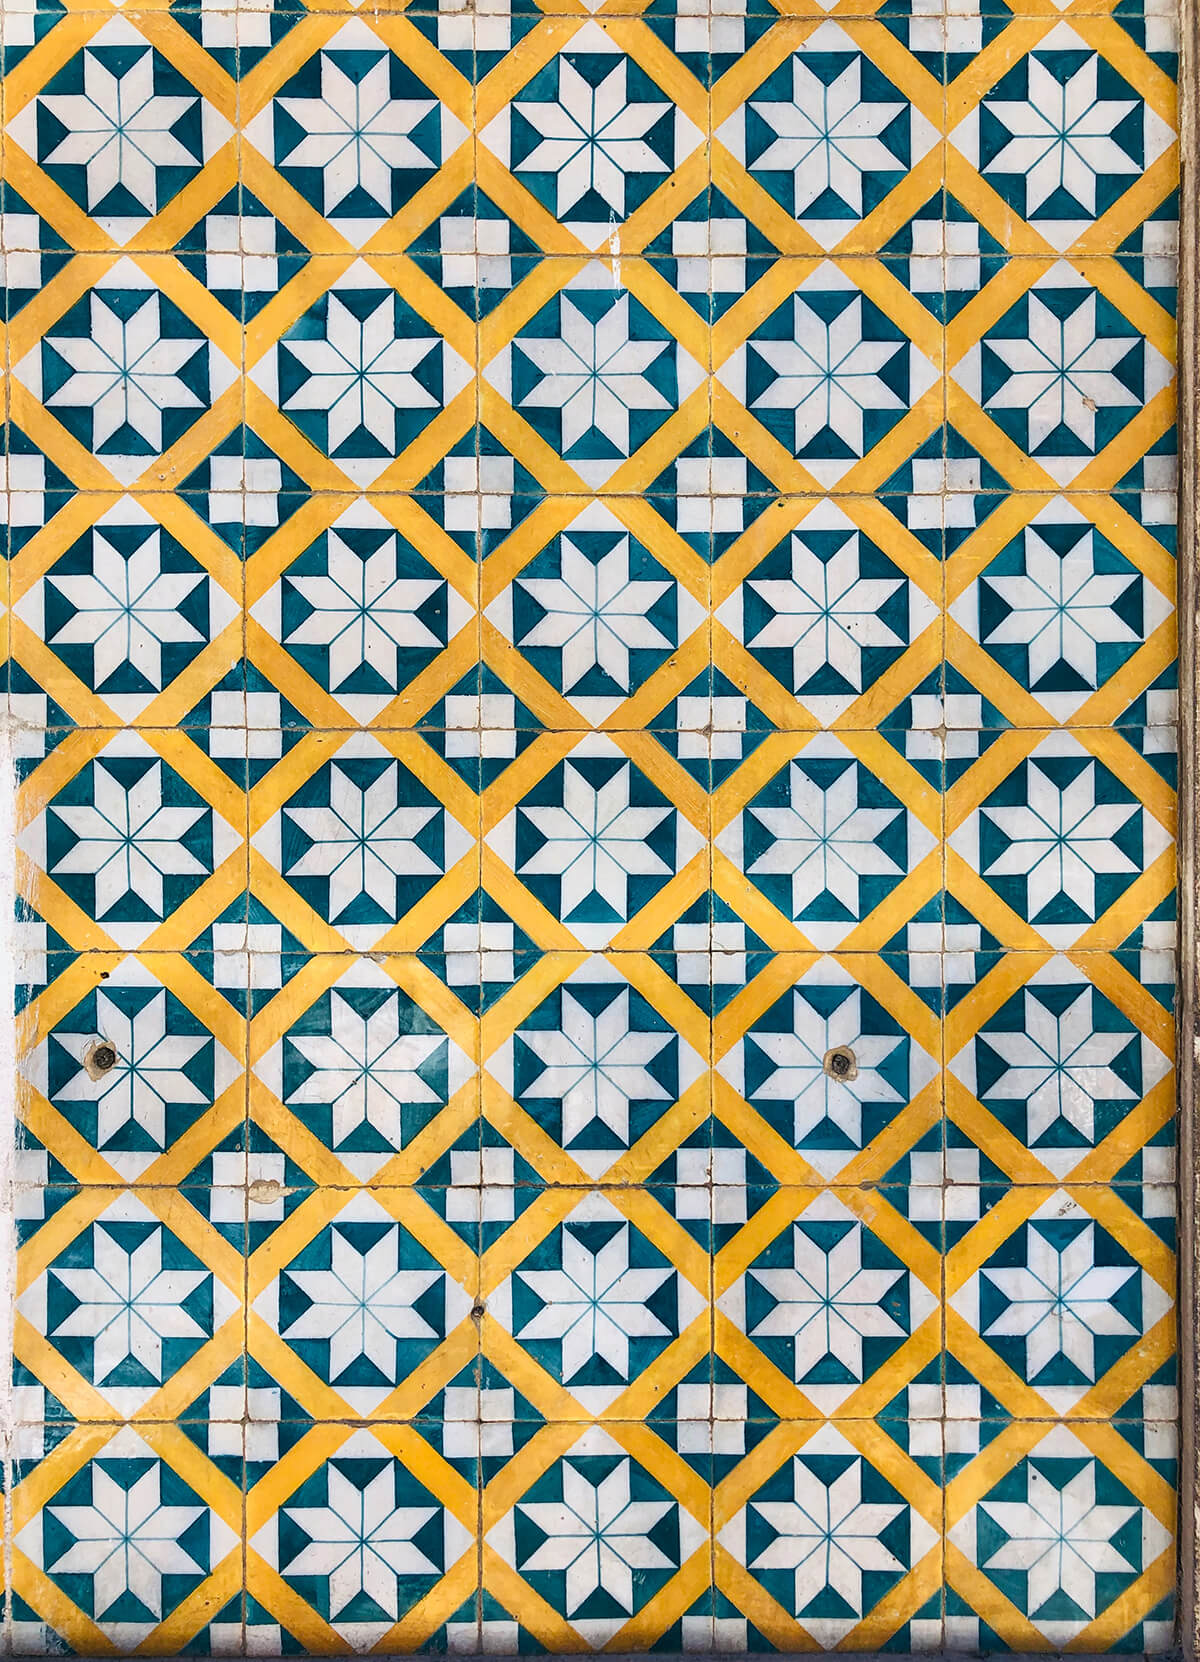 alice butenko zstWUZFj77w unsplash 2 - L’azulejo, le trésor décoratif du Portugal